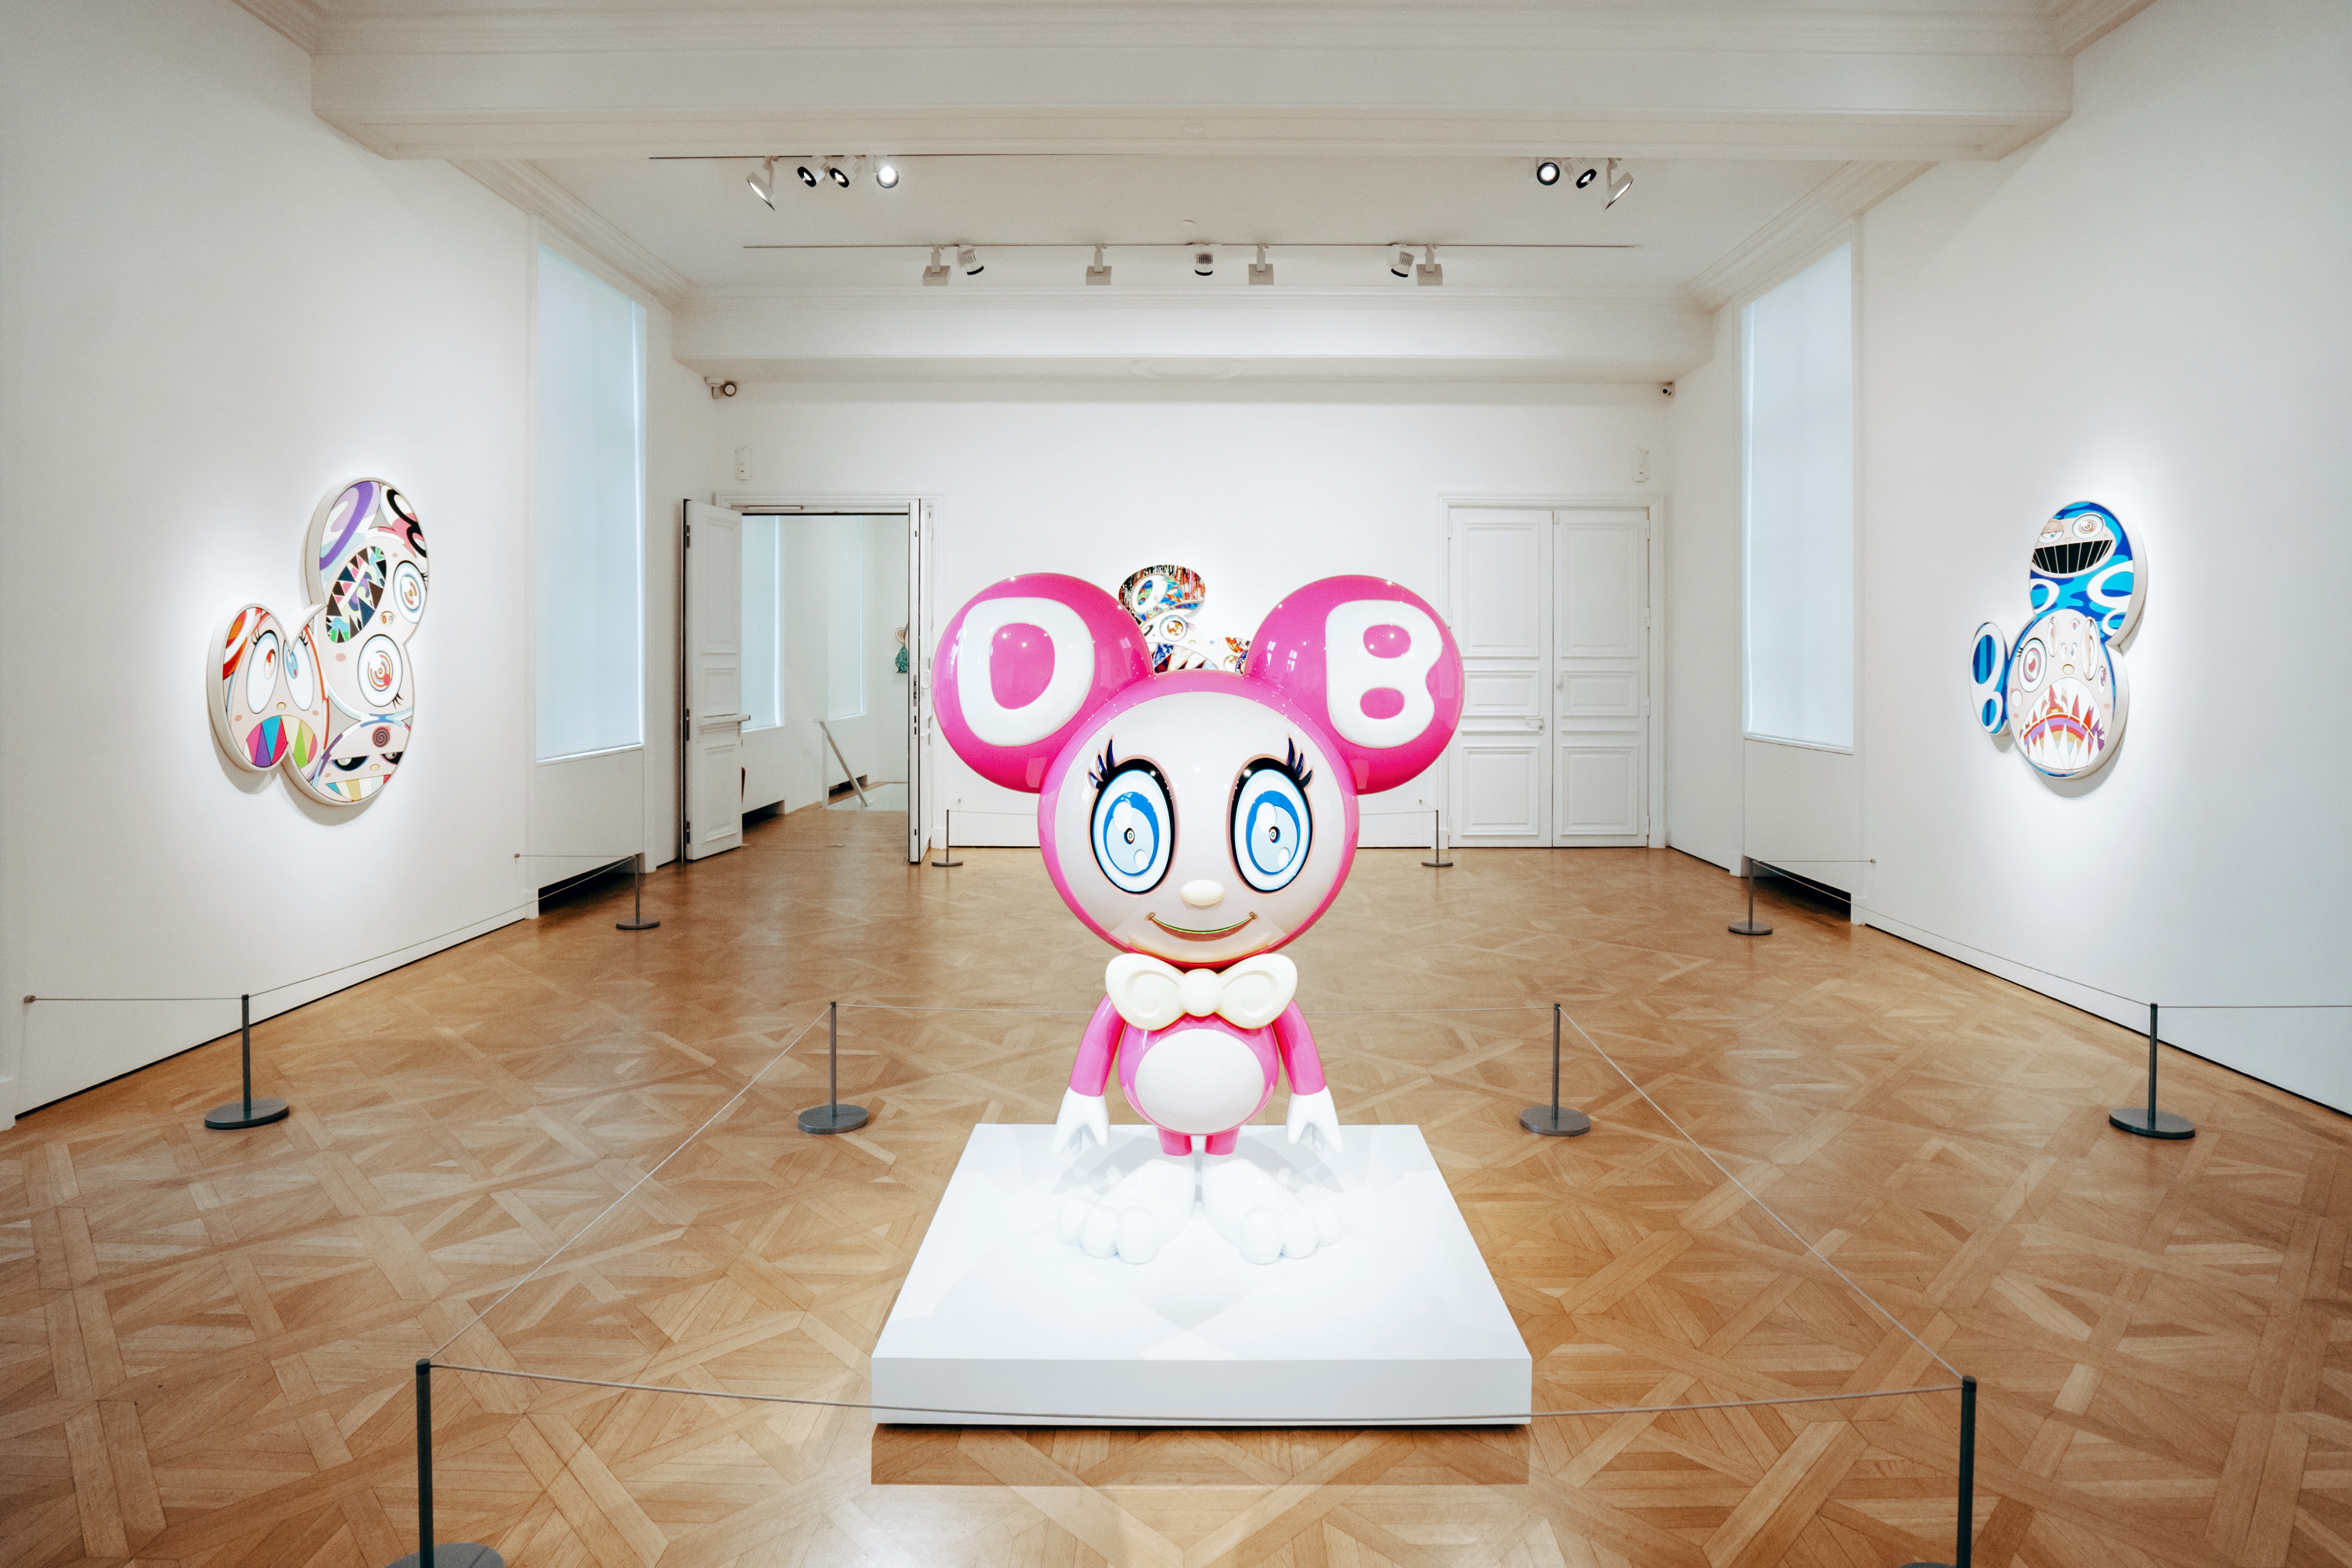 Takashi Murakami "Baka" Exhibition Galerie Perrotin Paris Mr. DOB Paintings Sculptures Devil Ko Qinghua